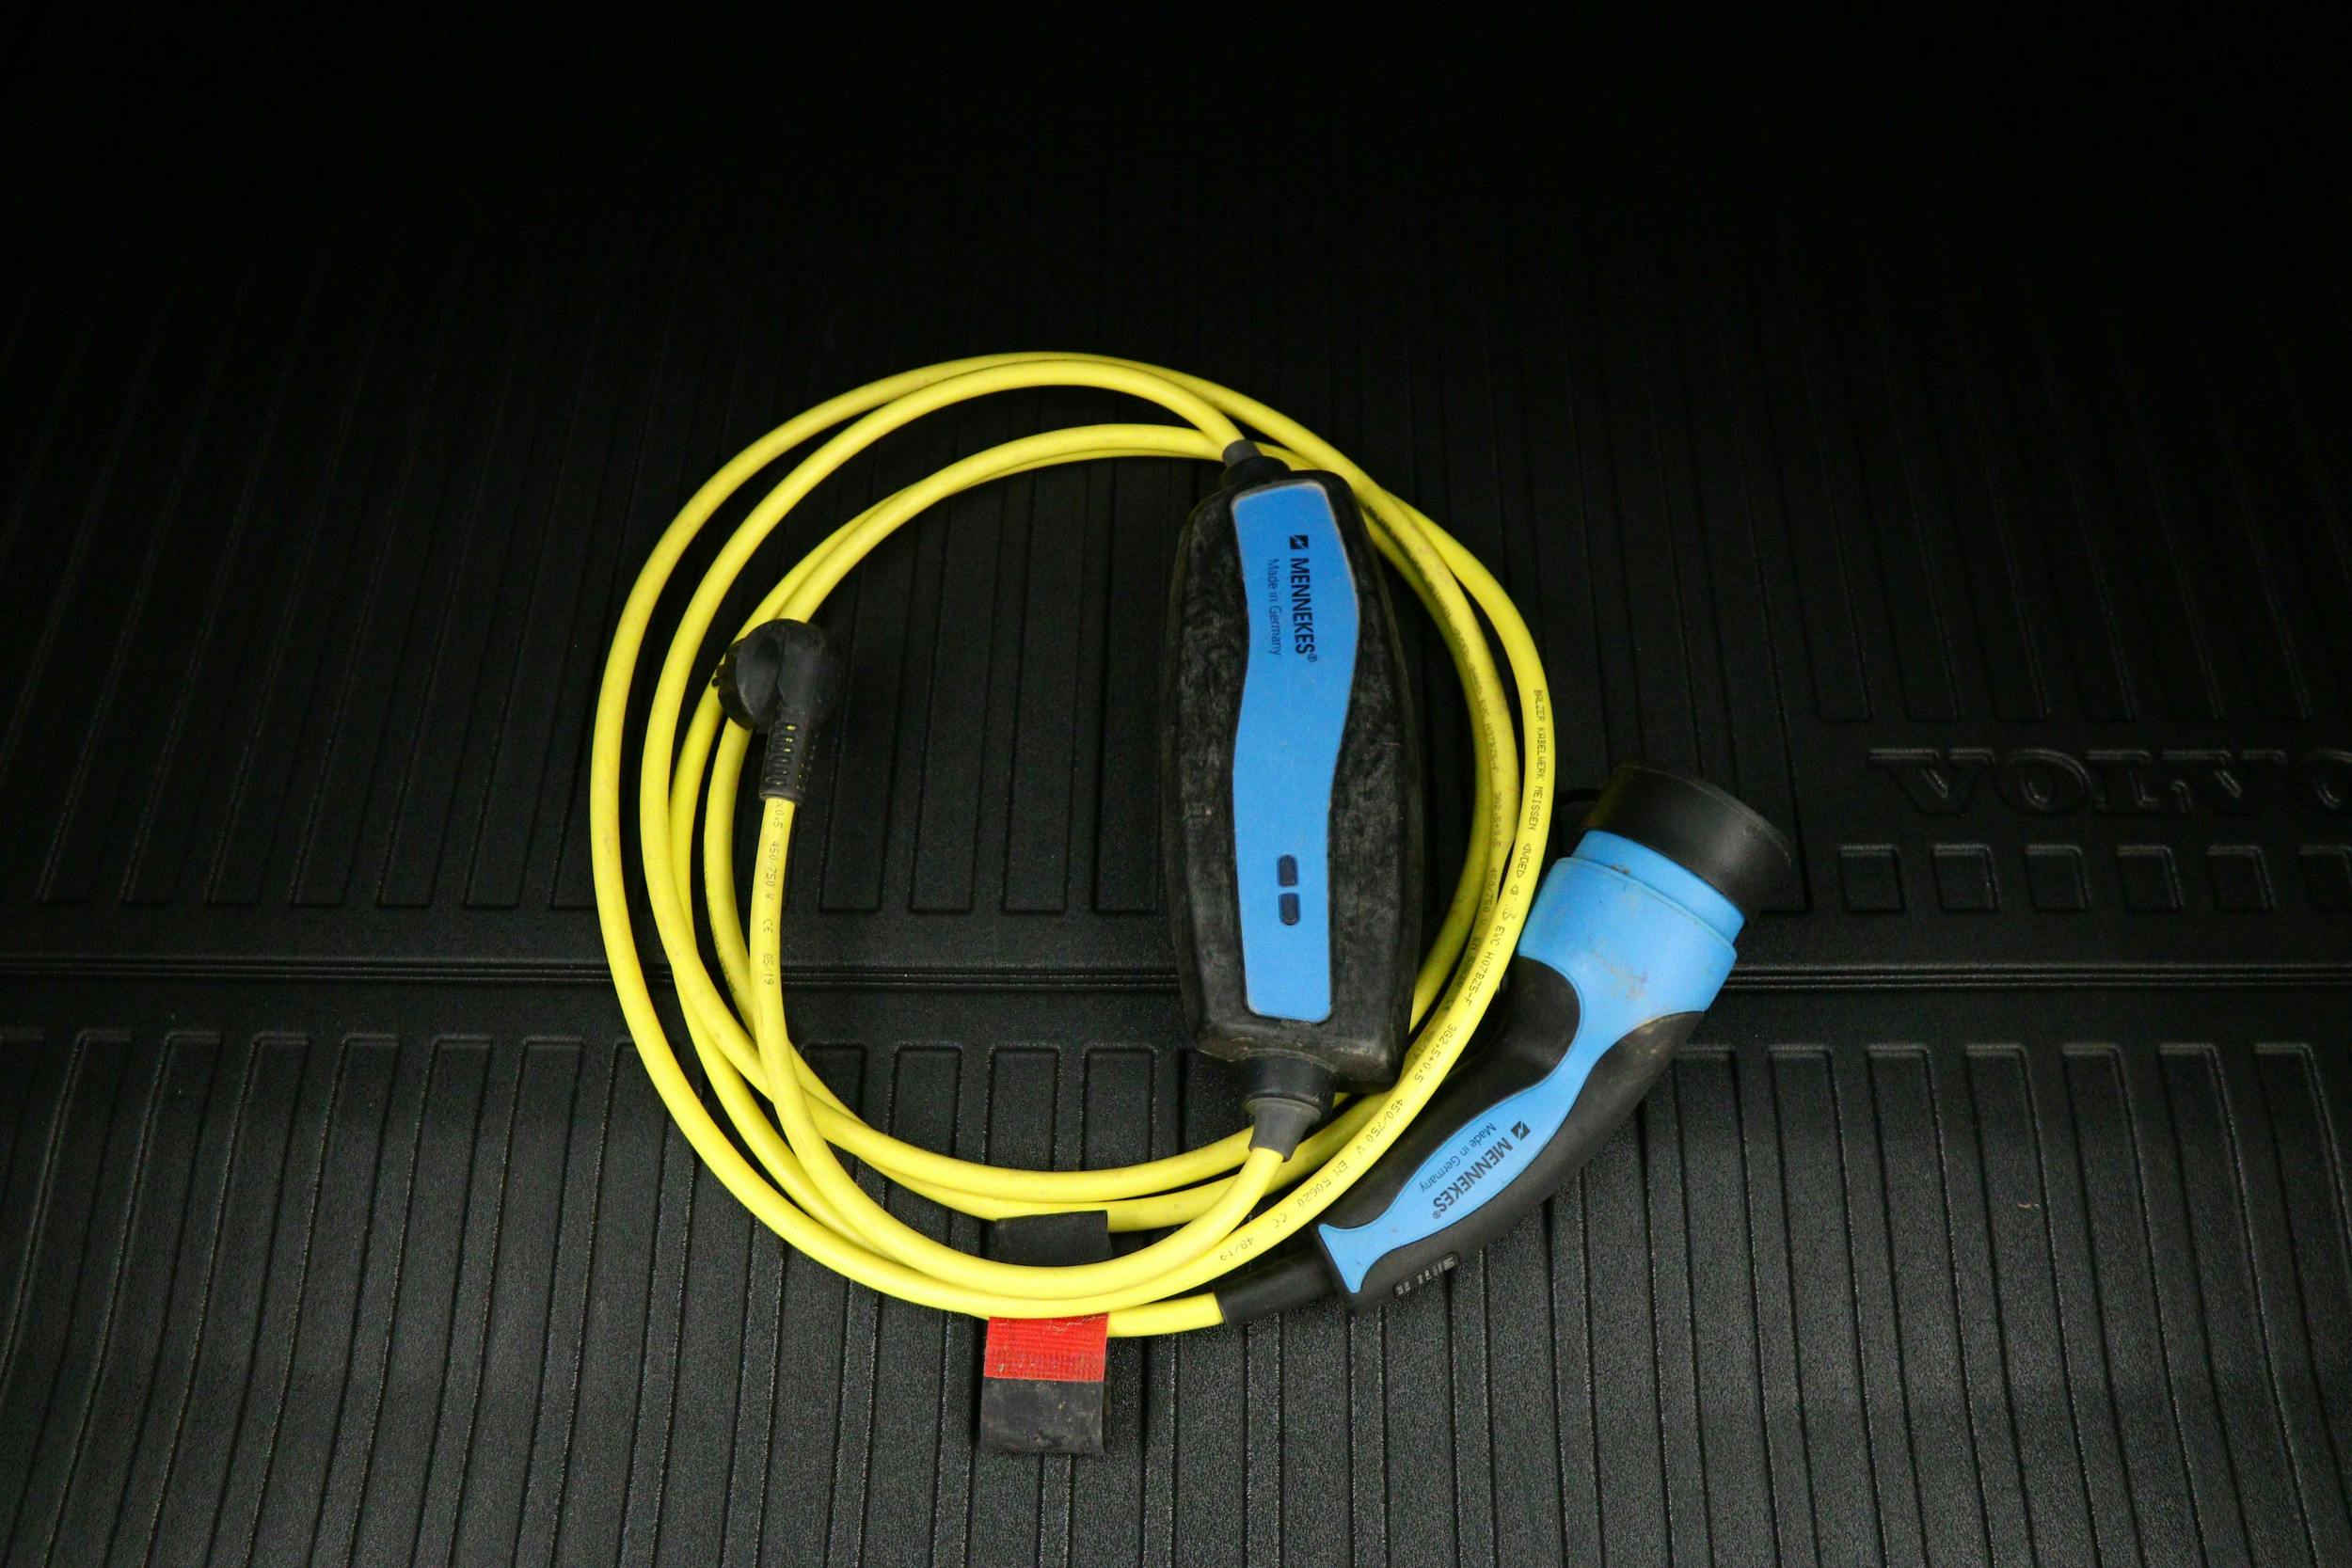 En laddningskabel med Typ 2-kontakt - för laddning i eluttag